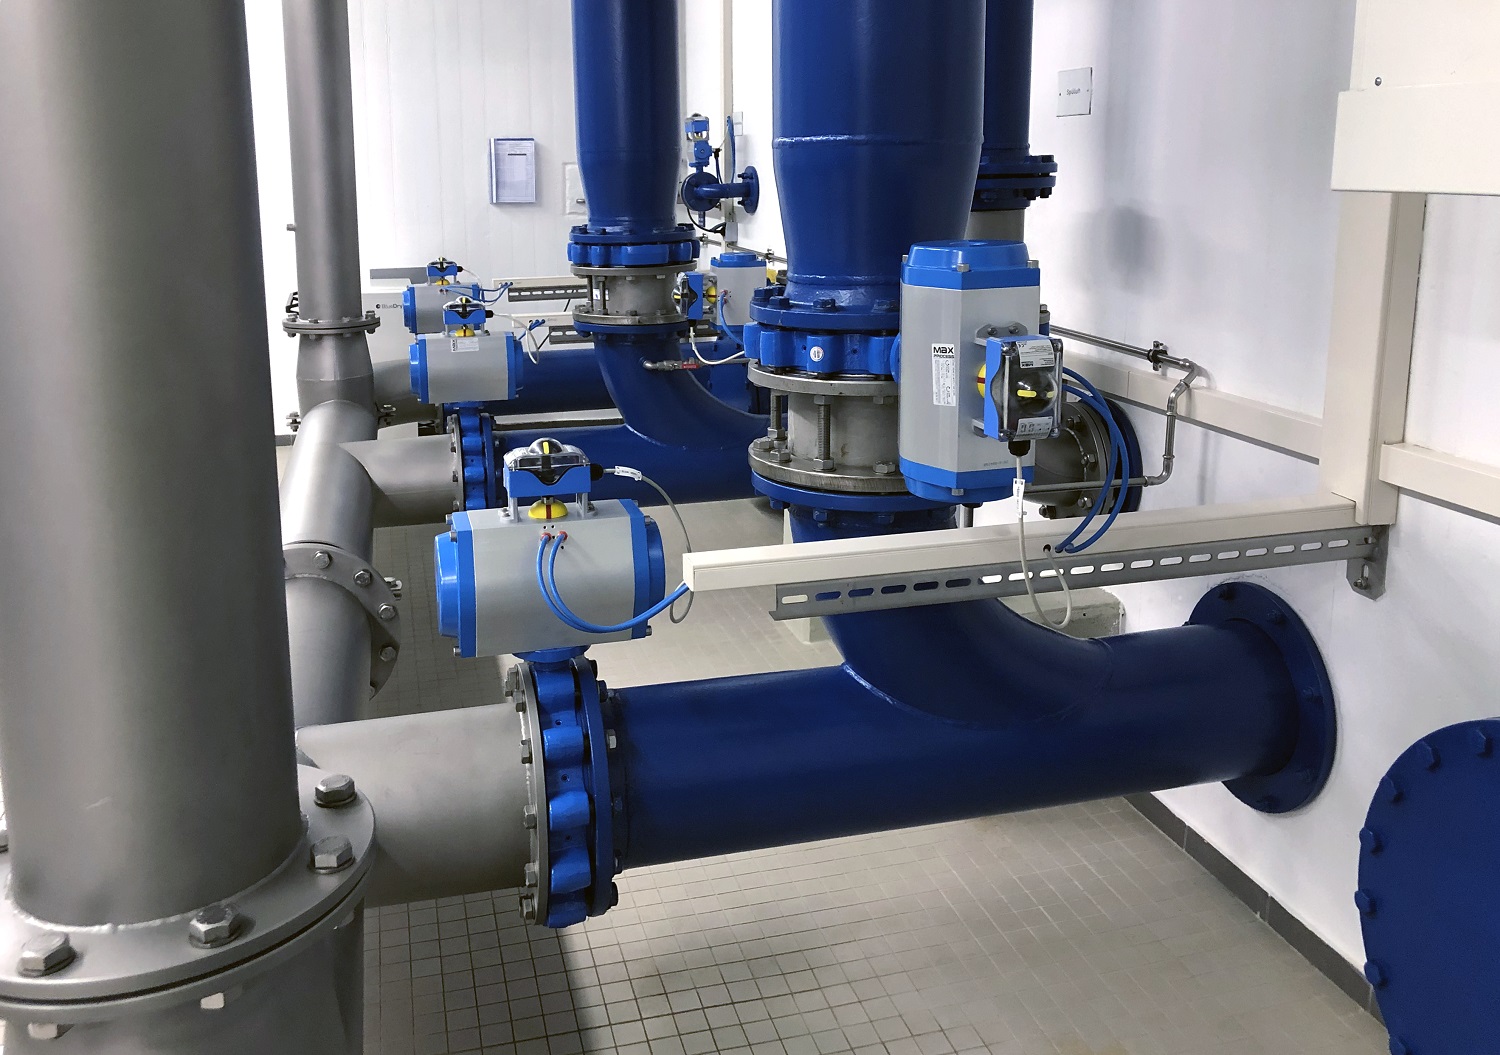 Rotork rack & pinion fluid power actuators at a municipal waterworks plant in Schwebberg.